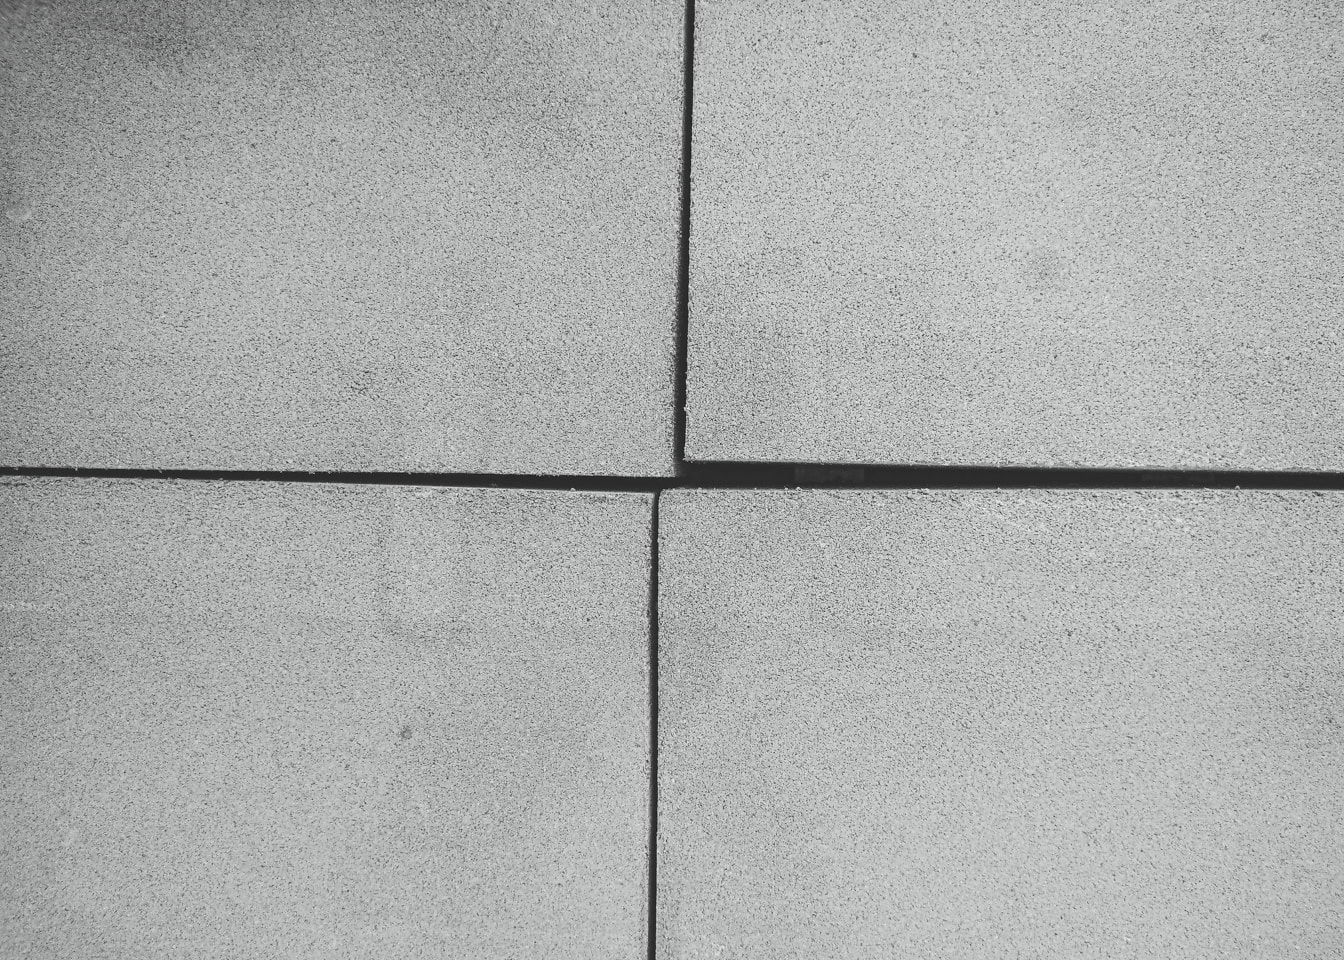 Black and white texture of four concrete blocks